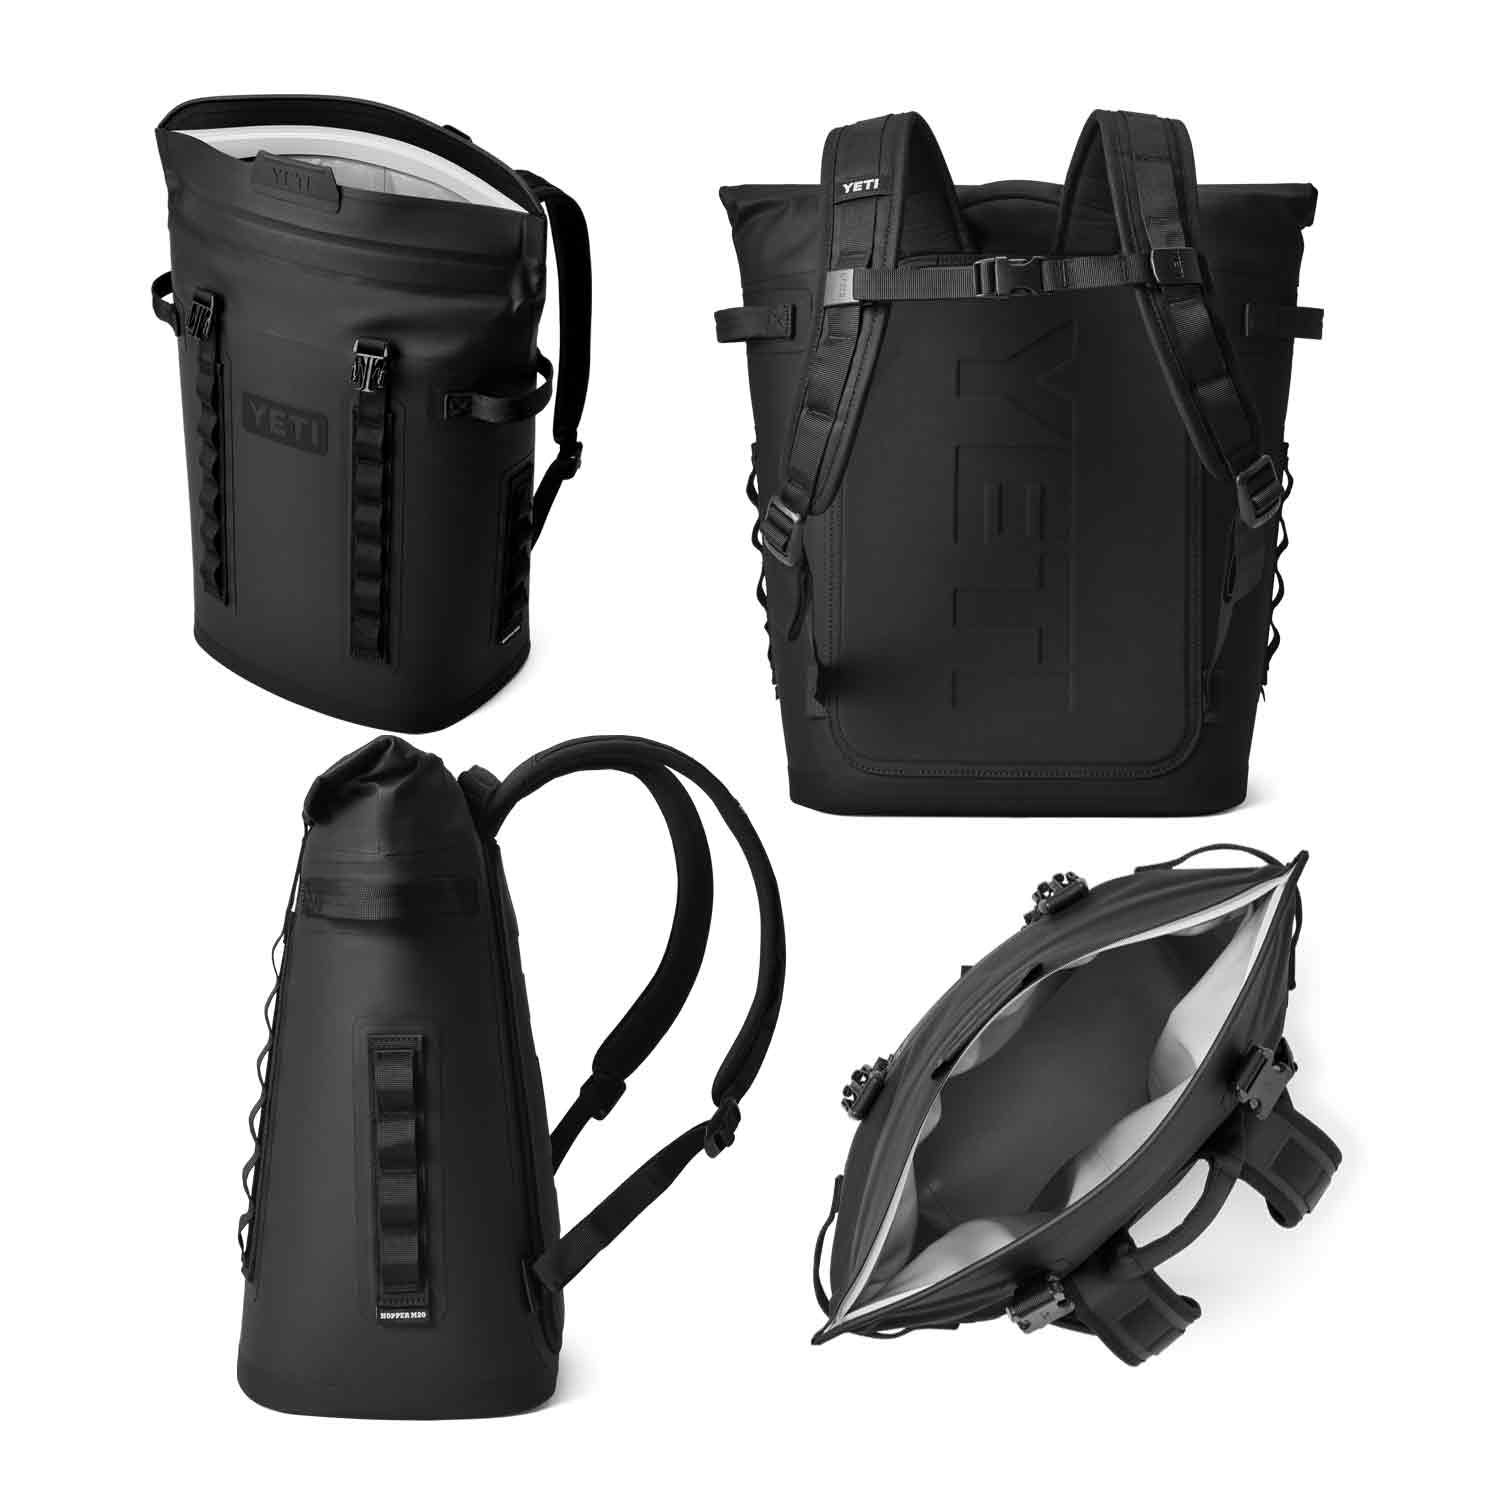 YETI Hopper M20 Backpack Cooler (Limited Edition Black